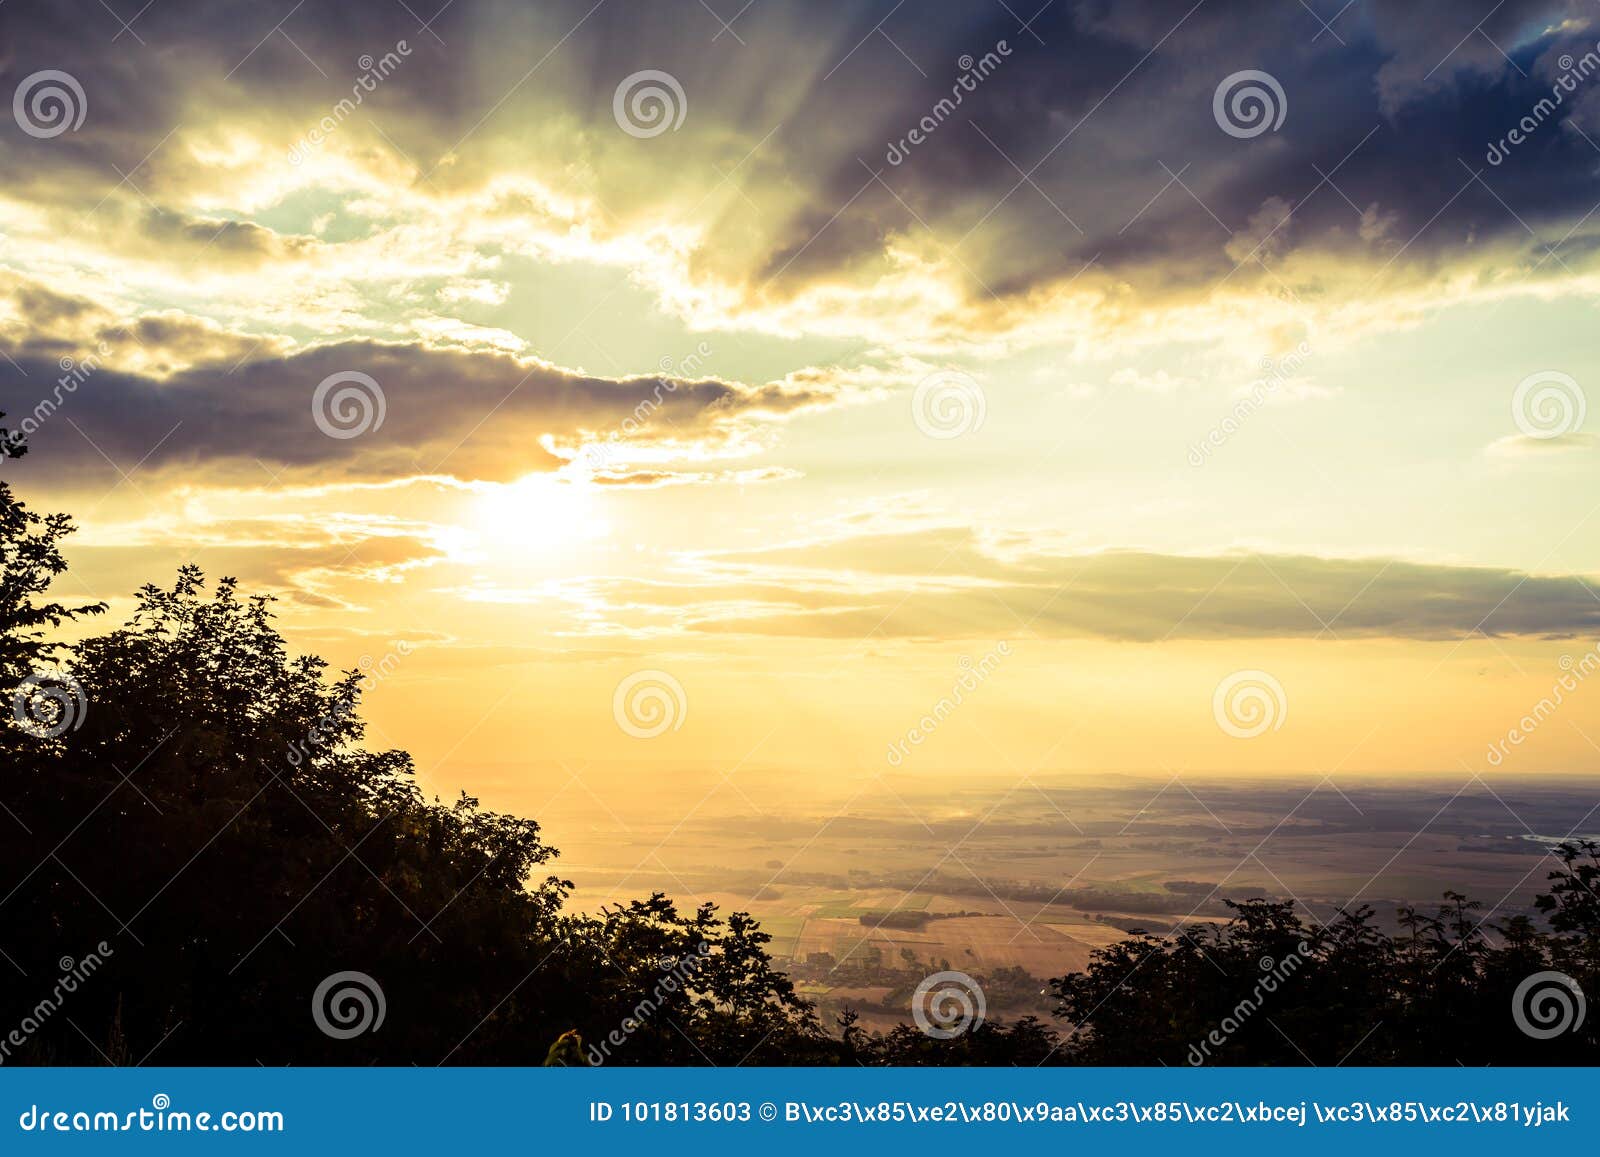 inspiring sunset landscape, mountain view point